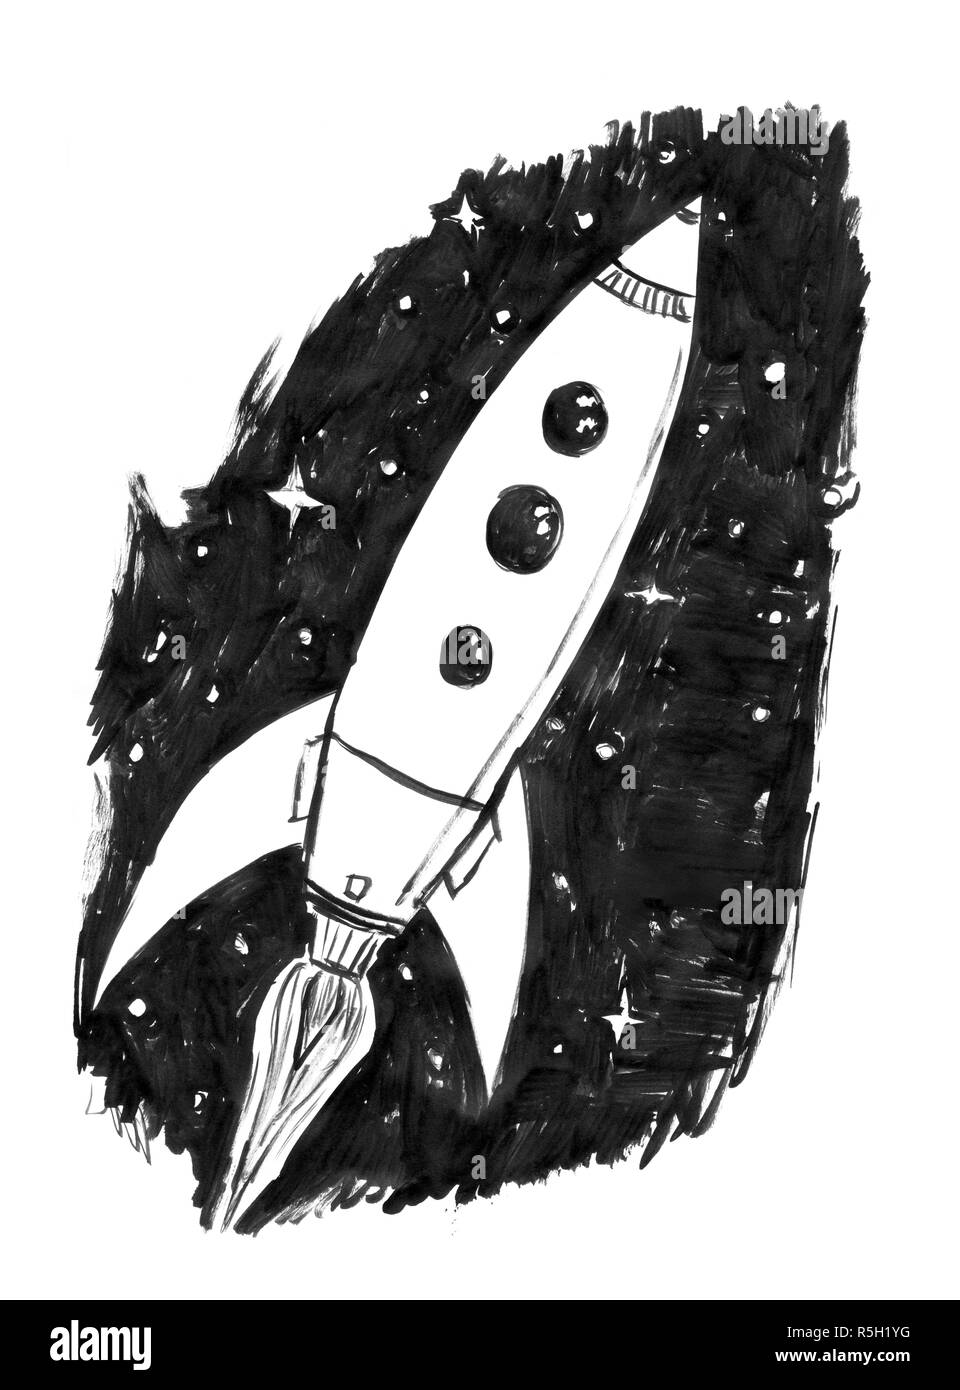 Black Ink Grunge Hand Drawing of Retro Spaceship or Space Rocket Stock Photo